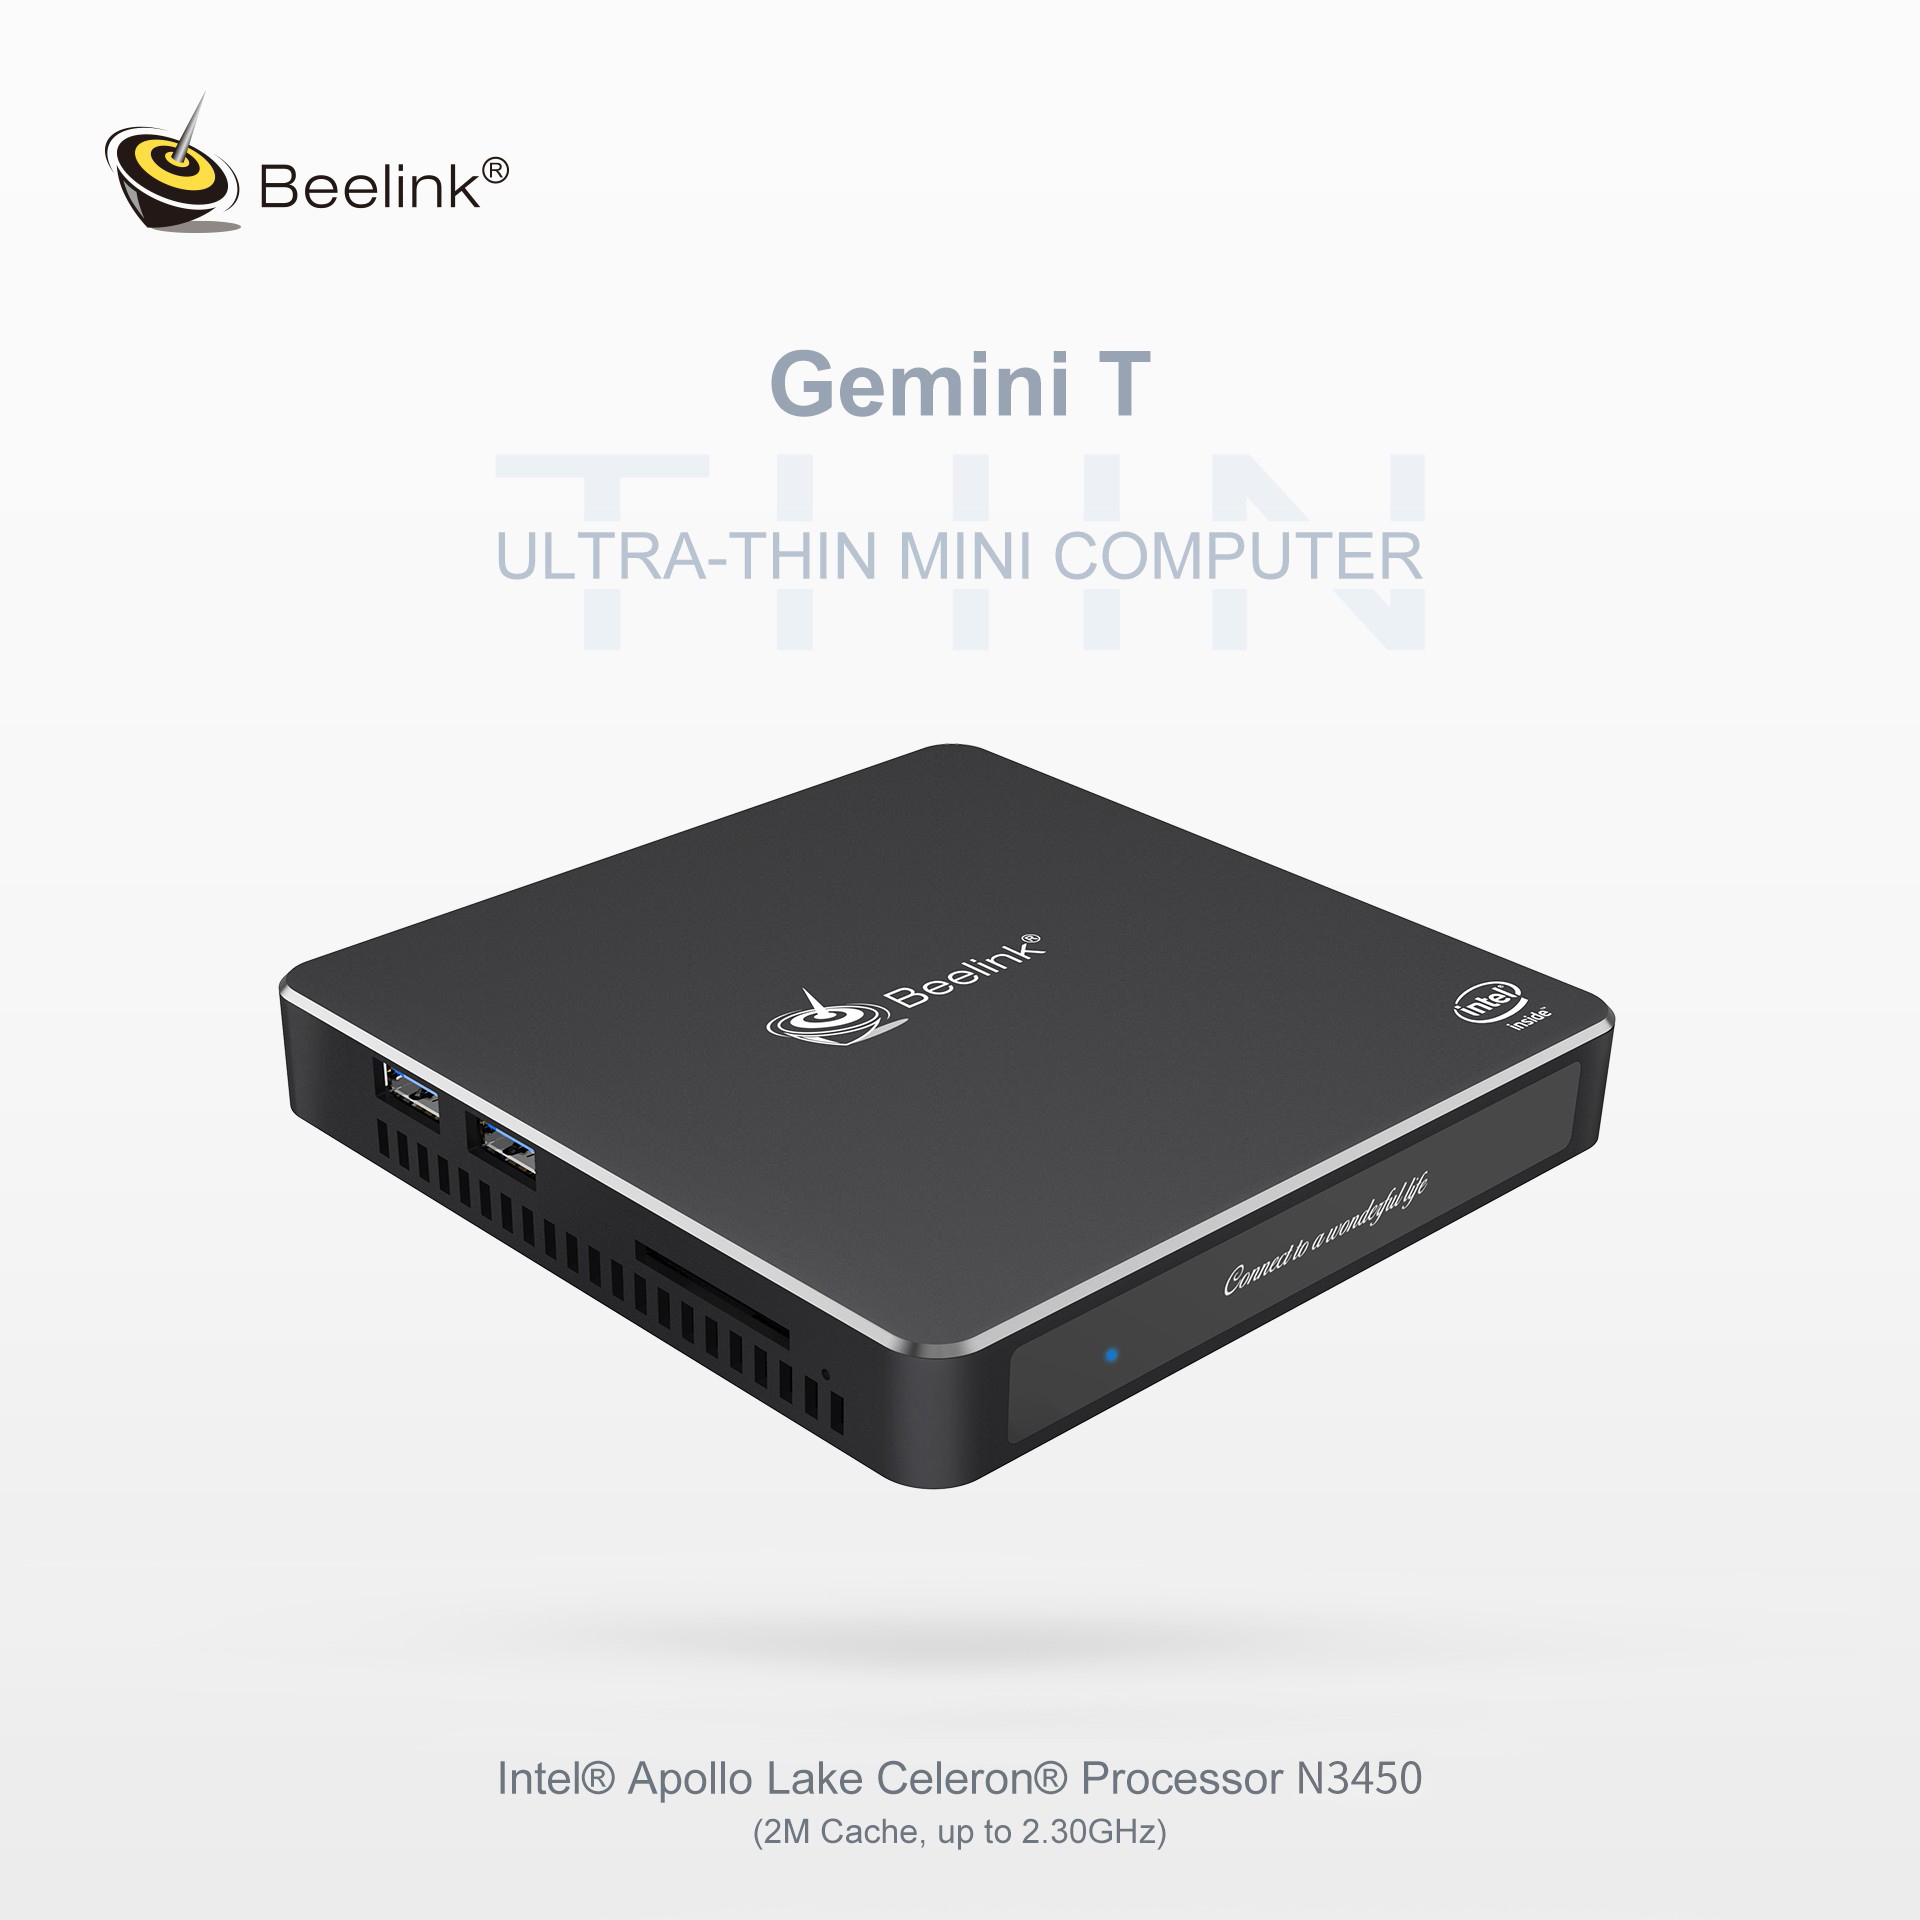 Beelink Gemini T34 Intel Apollo Lake N3450 Mini PC With Intel HD Graphics 500 / 2.4GHz + 5.8GHz WiFi / 1000Mbps / 4 X USB3.0 / Bluetooth 4.0 / Support Dual Screen Display - Black 8GB LPDDR3 + 128GB SSD EU Plug